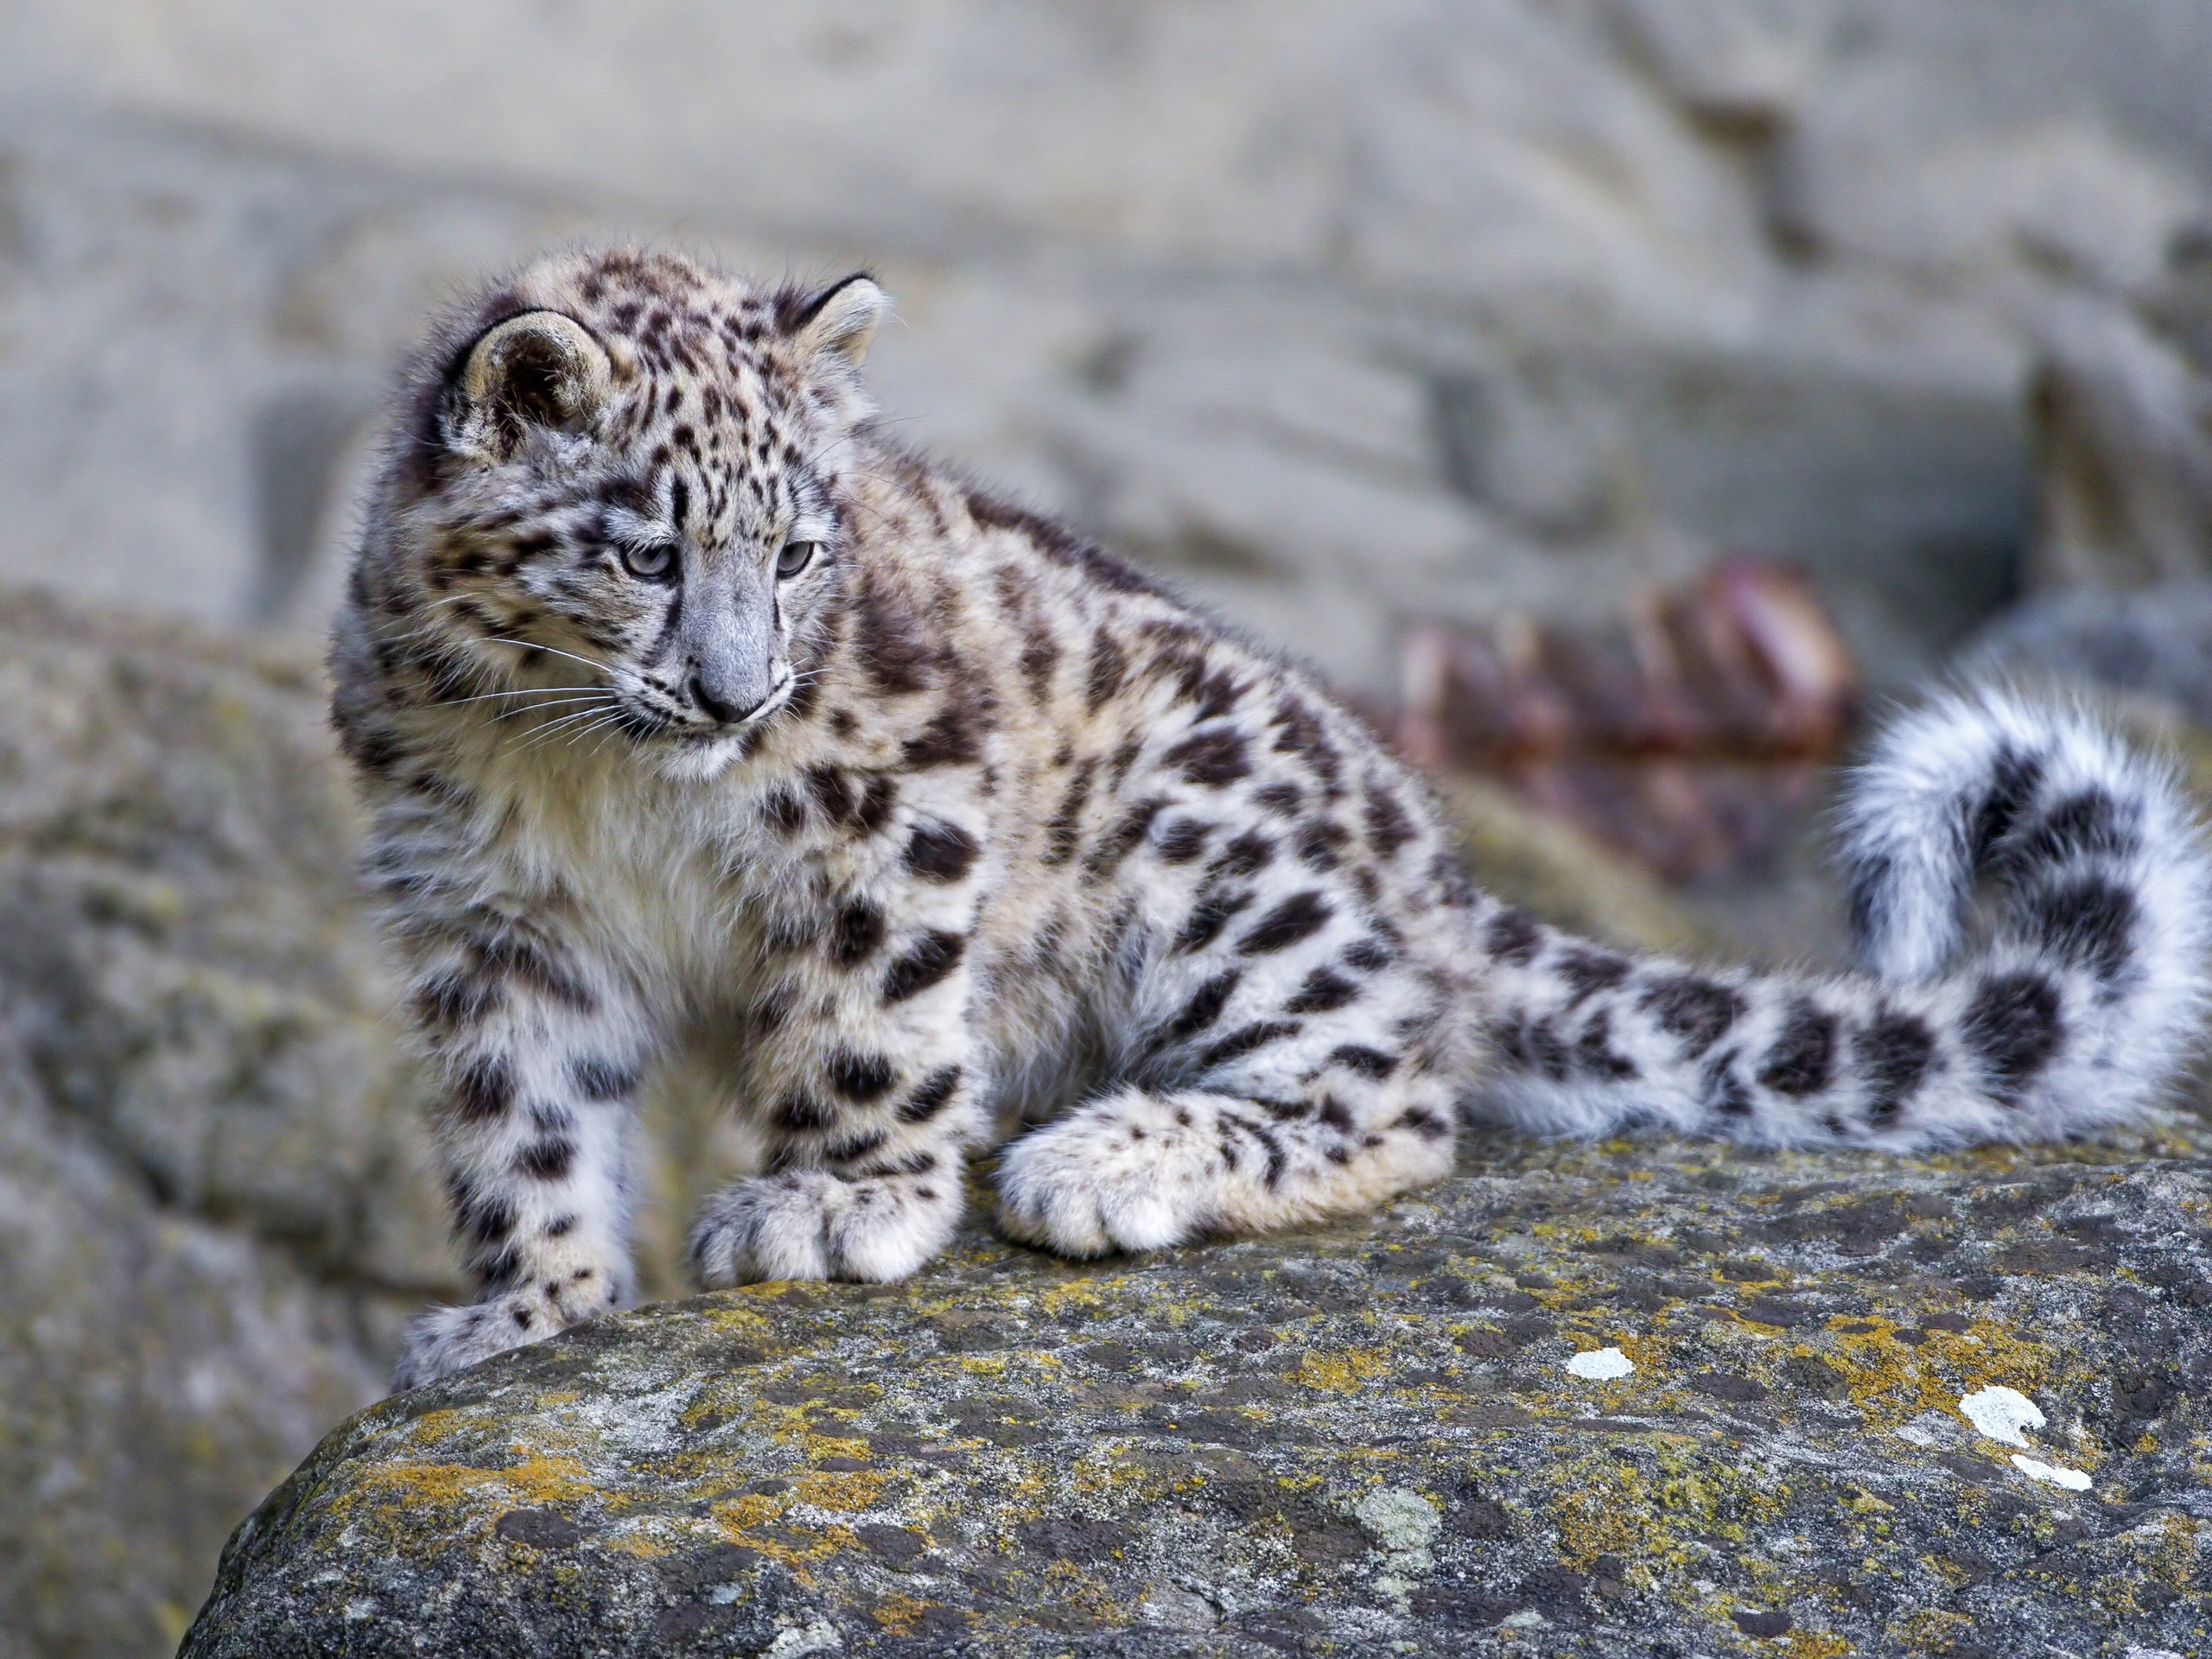 Cute snow leopard baby